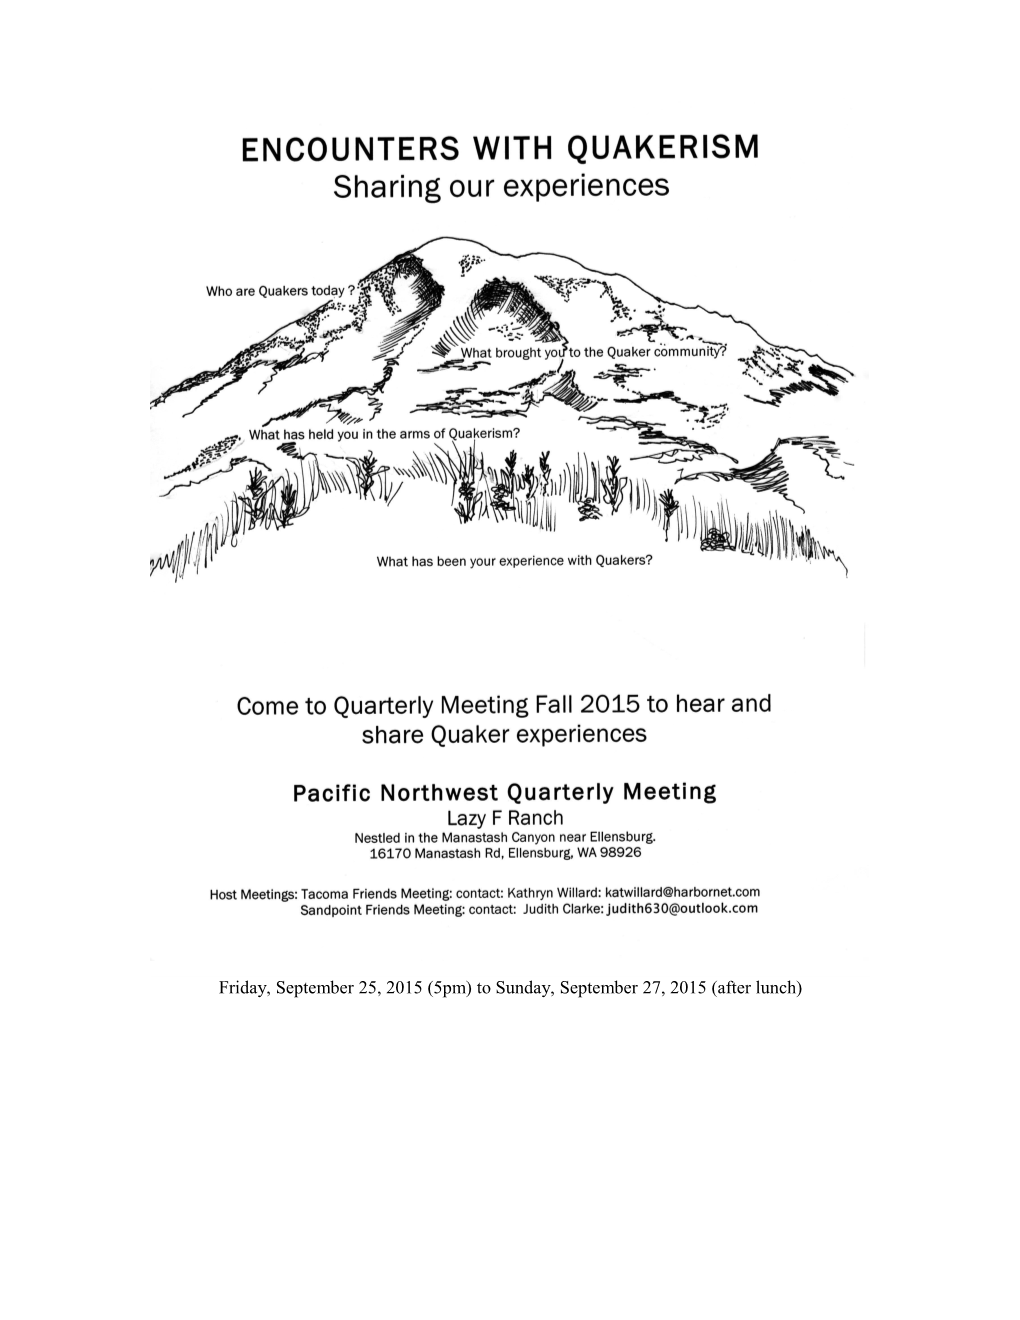 Pacific Northwest Quarterly Meeting Tentative Schedule